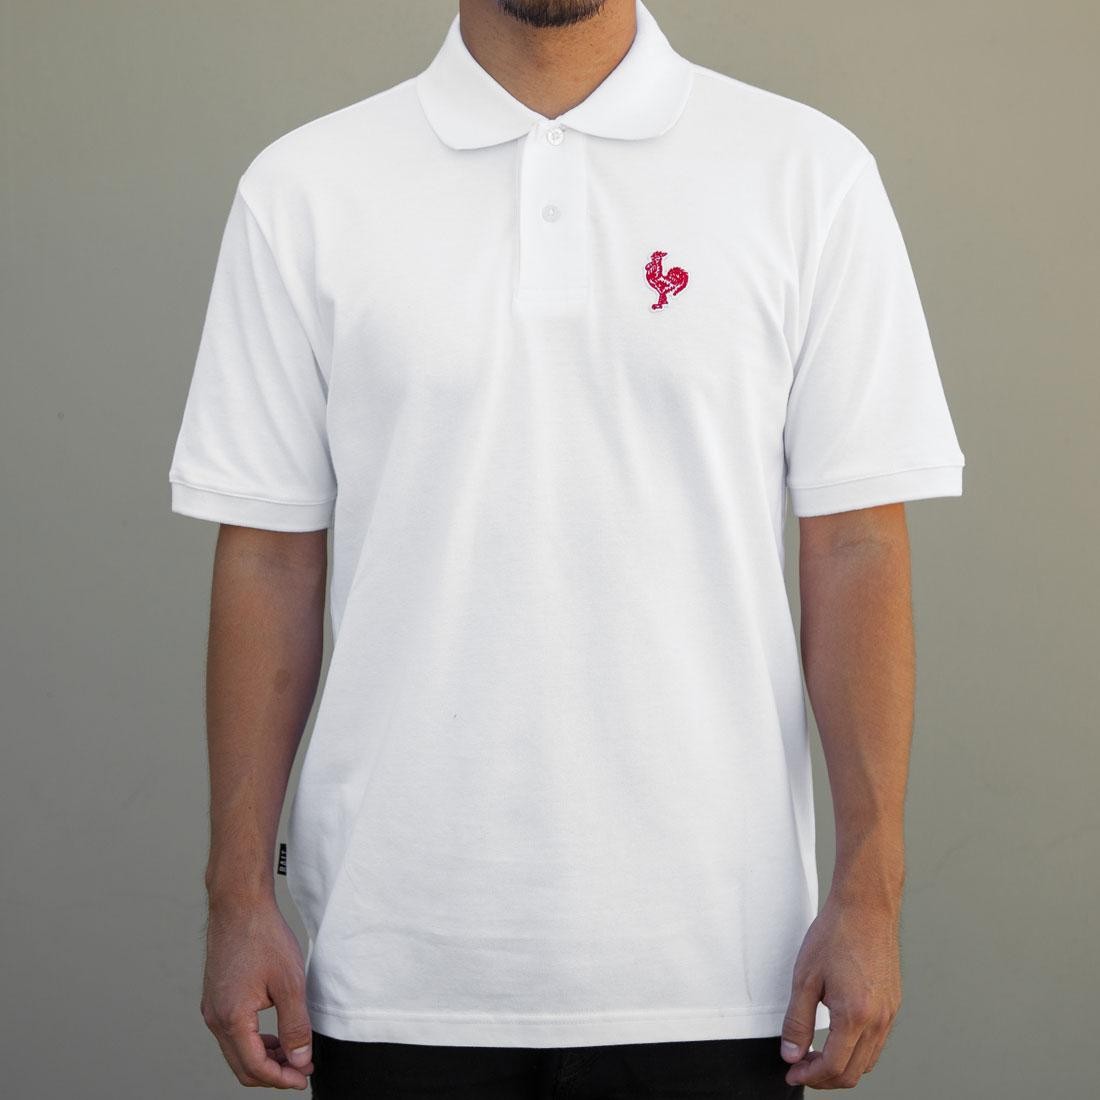 This season treat your wardrobe with the sleek and stylish ™ Short Sleeve Cropped Polo Shirt Polo Shirt (white)